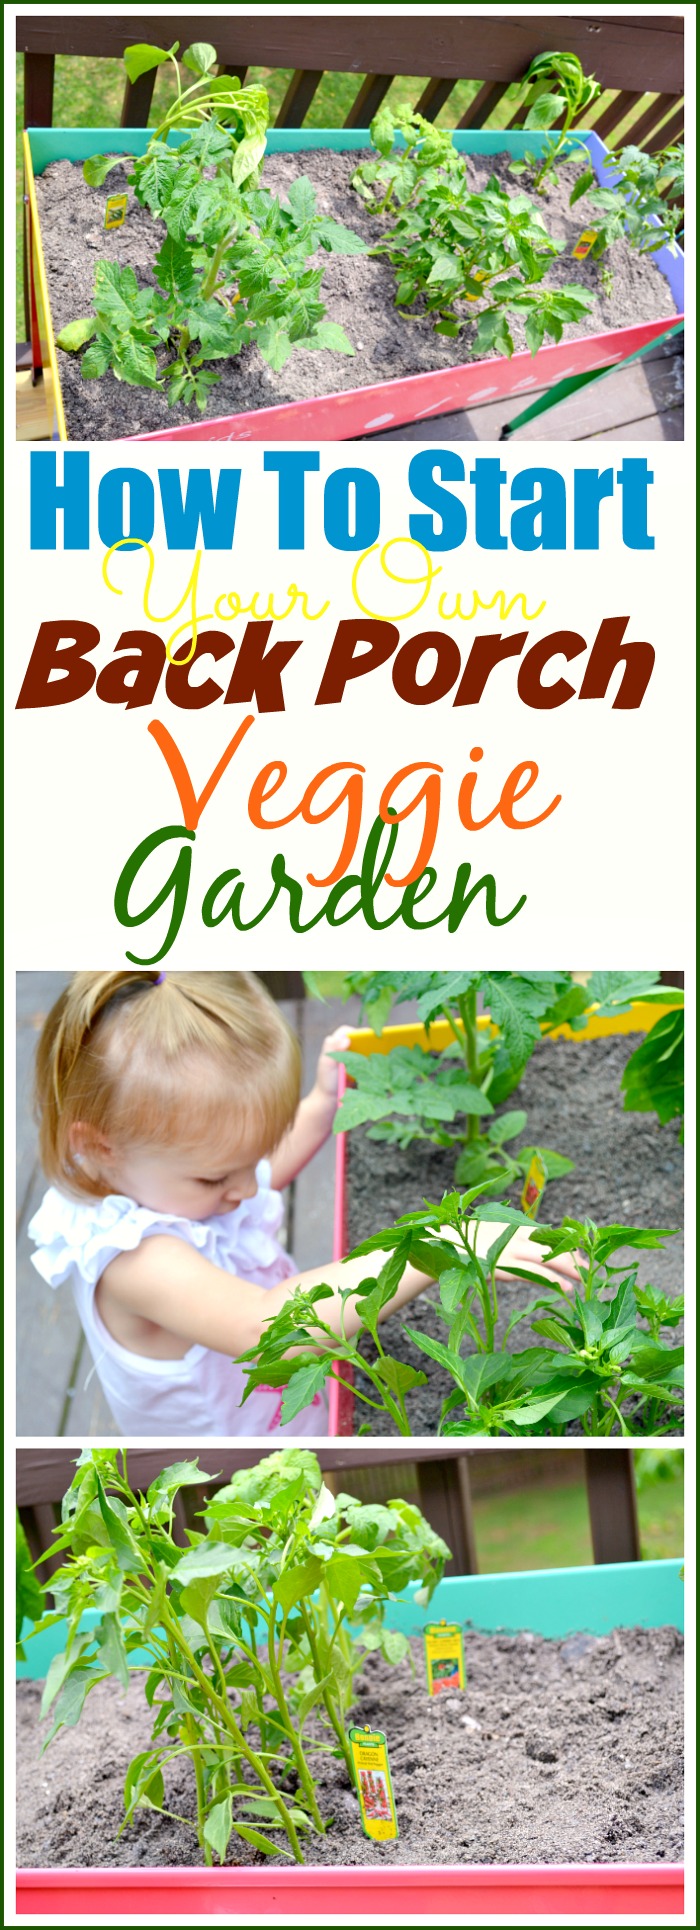 How To Start Your Own Back Porch Veggie Garden